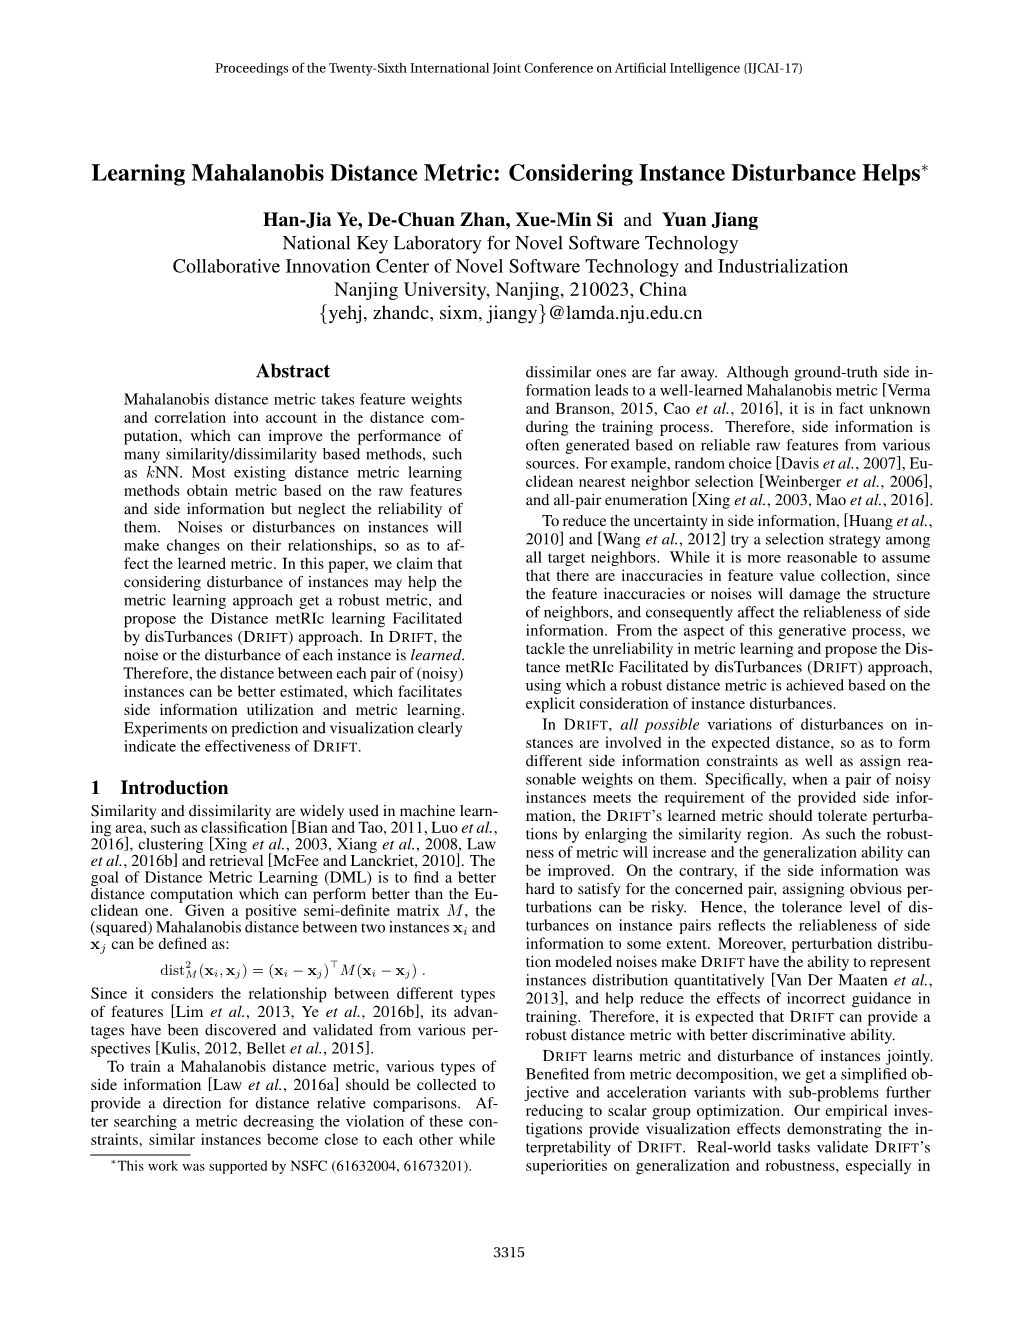 Learning Mahalanobis Distance Metric: Considering Instance Disturbance Helps∗